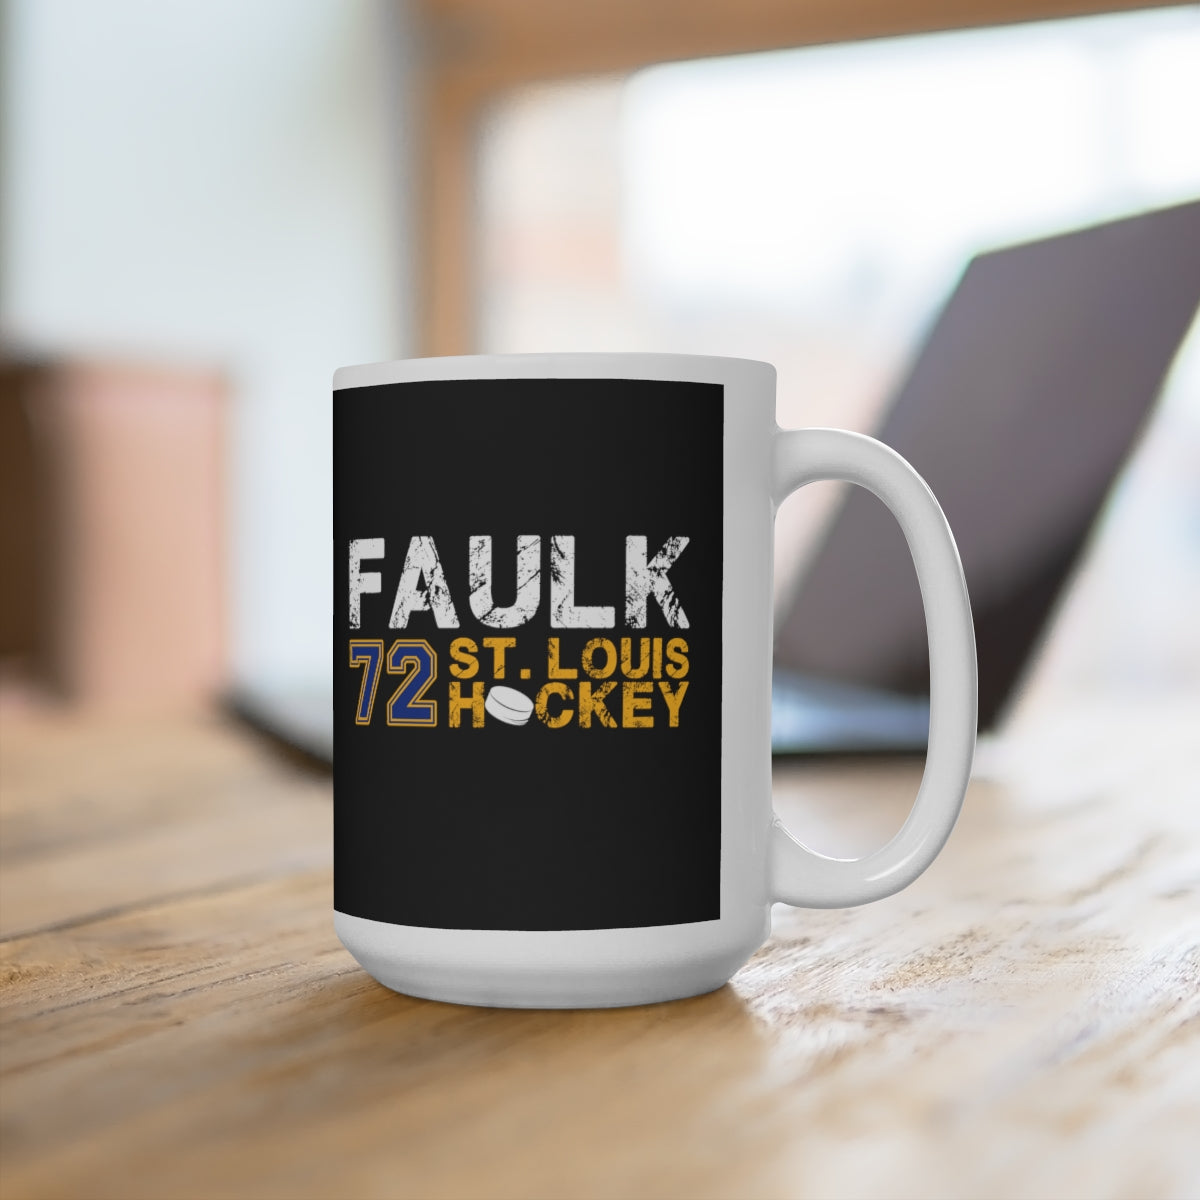 Faulk 72 St. Louis Hockey Ceramic Coffee Mug In Black, 15oz